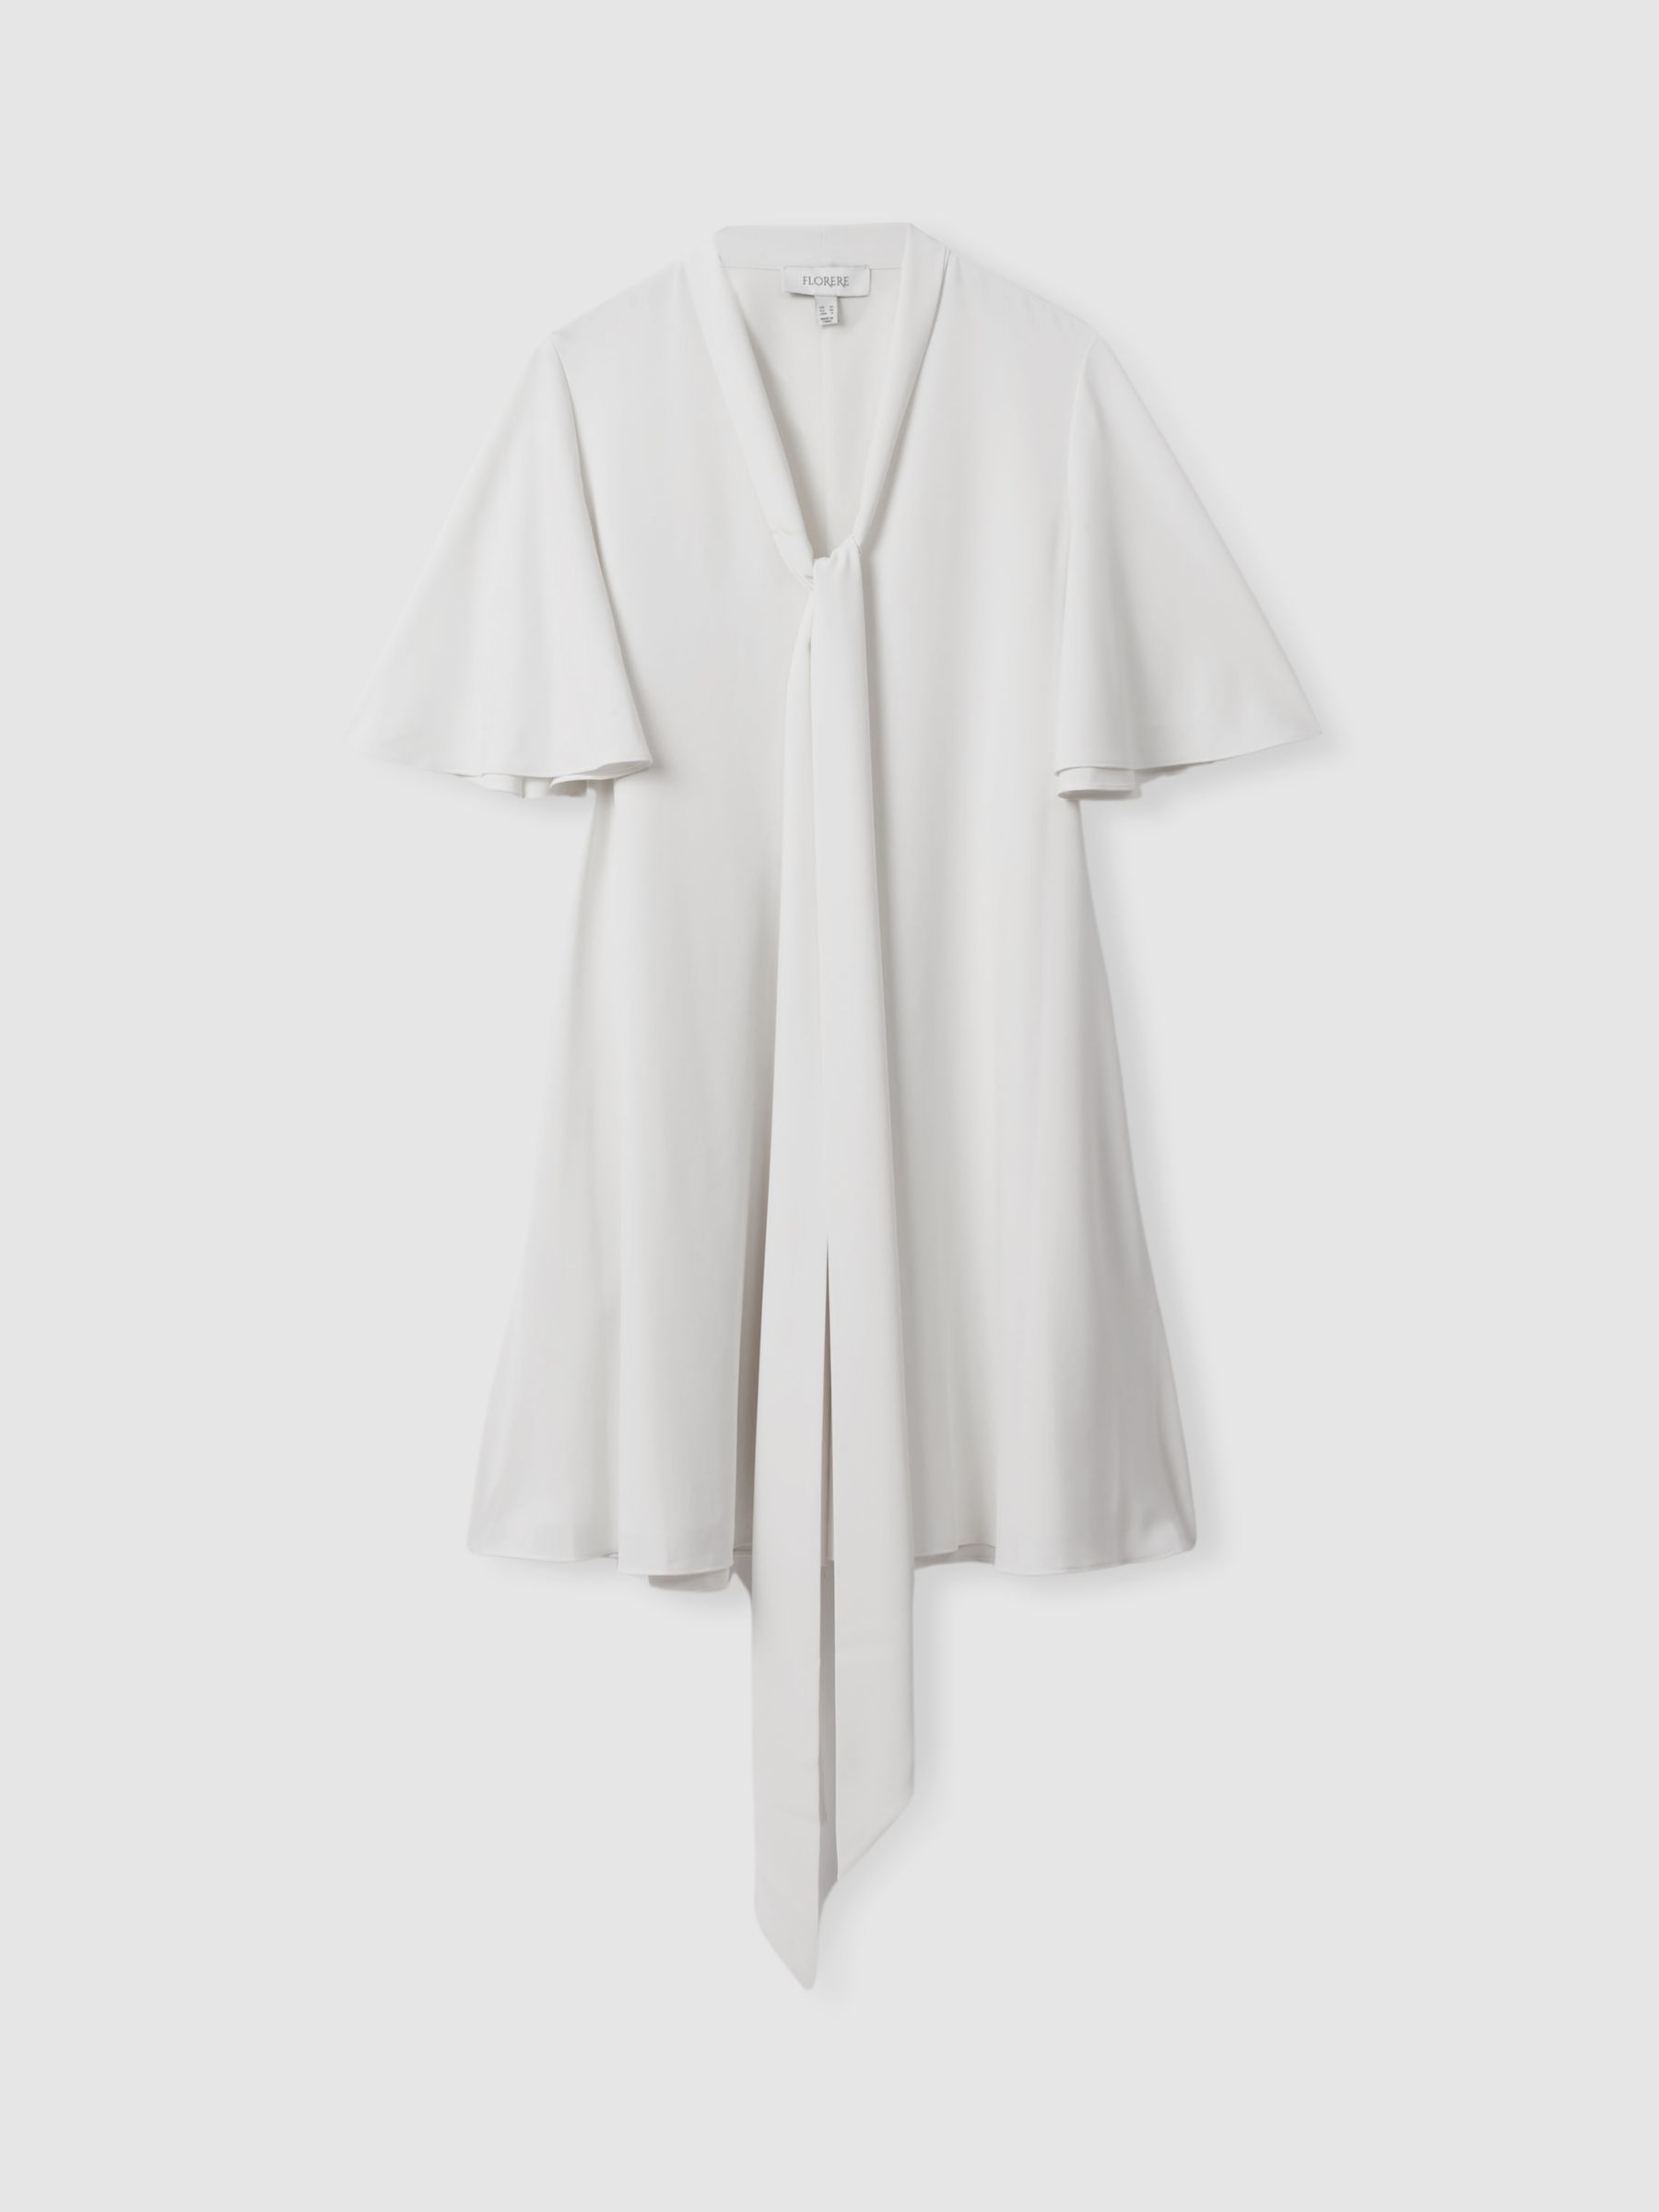 FLORERE Tie Neck Frill Sleeve Mini Dress, Ivory, 8